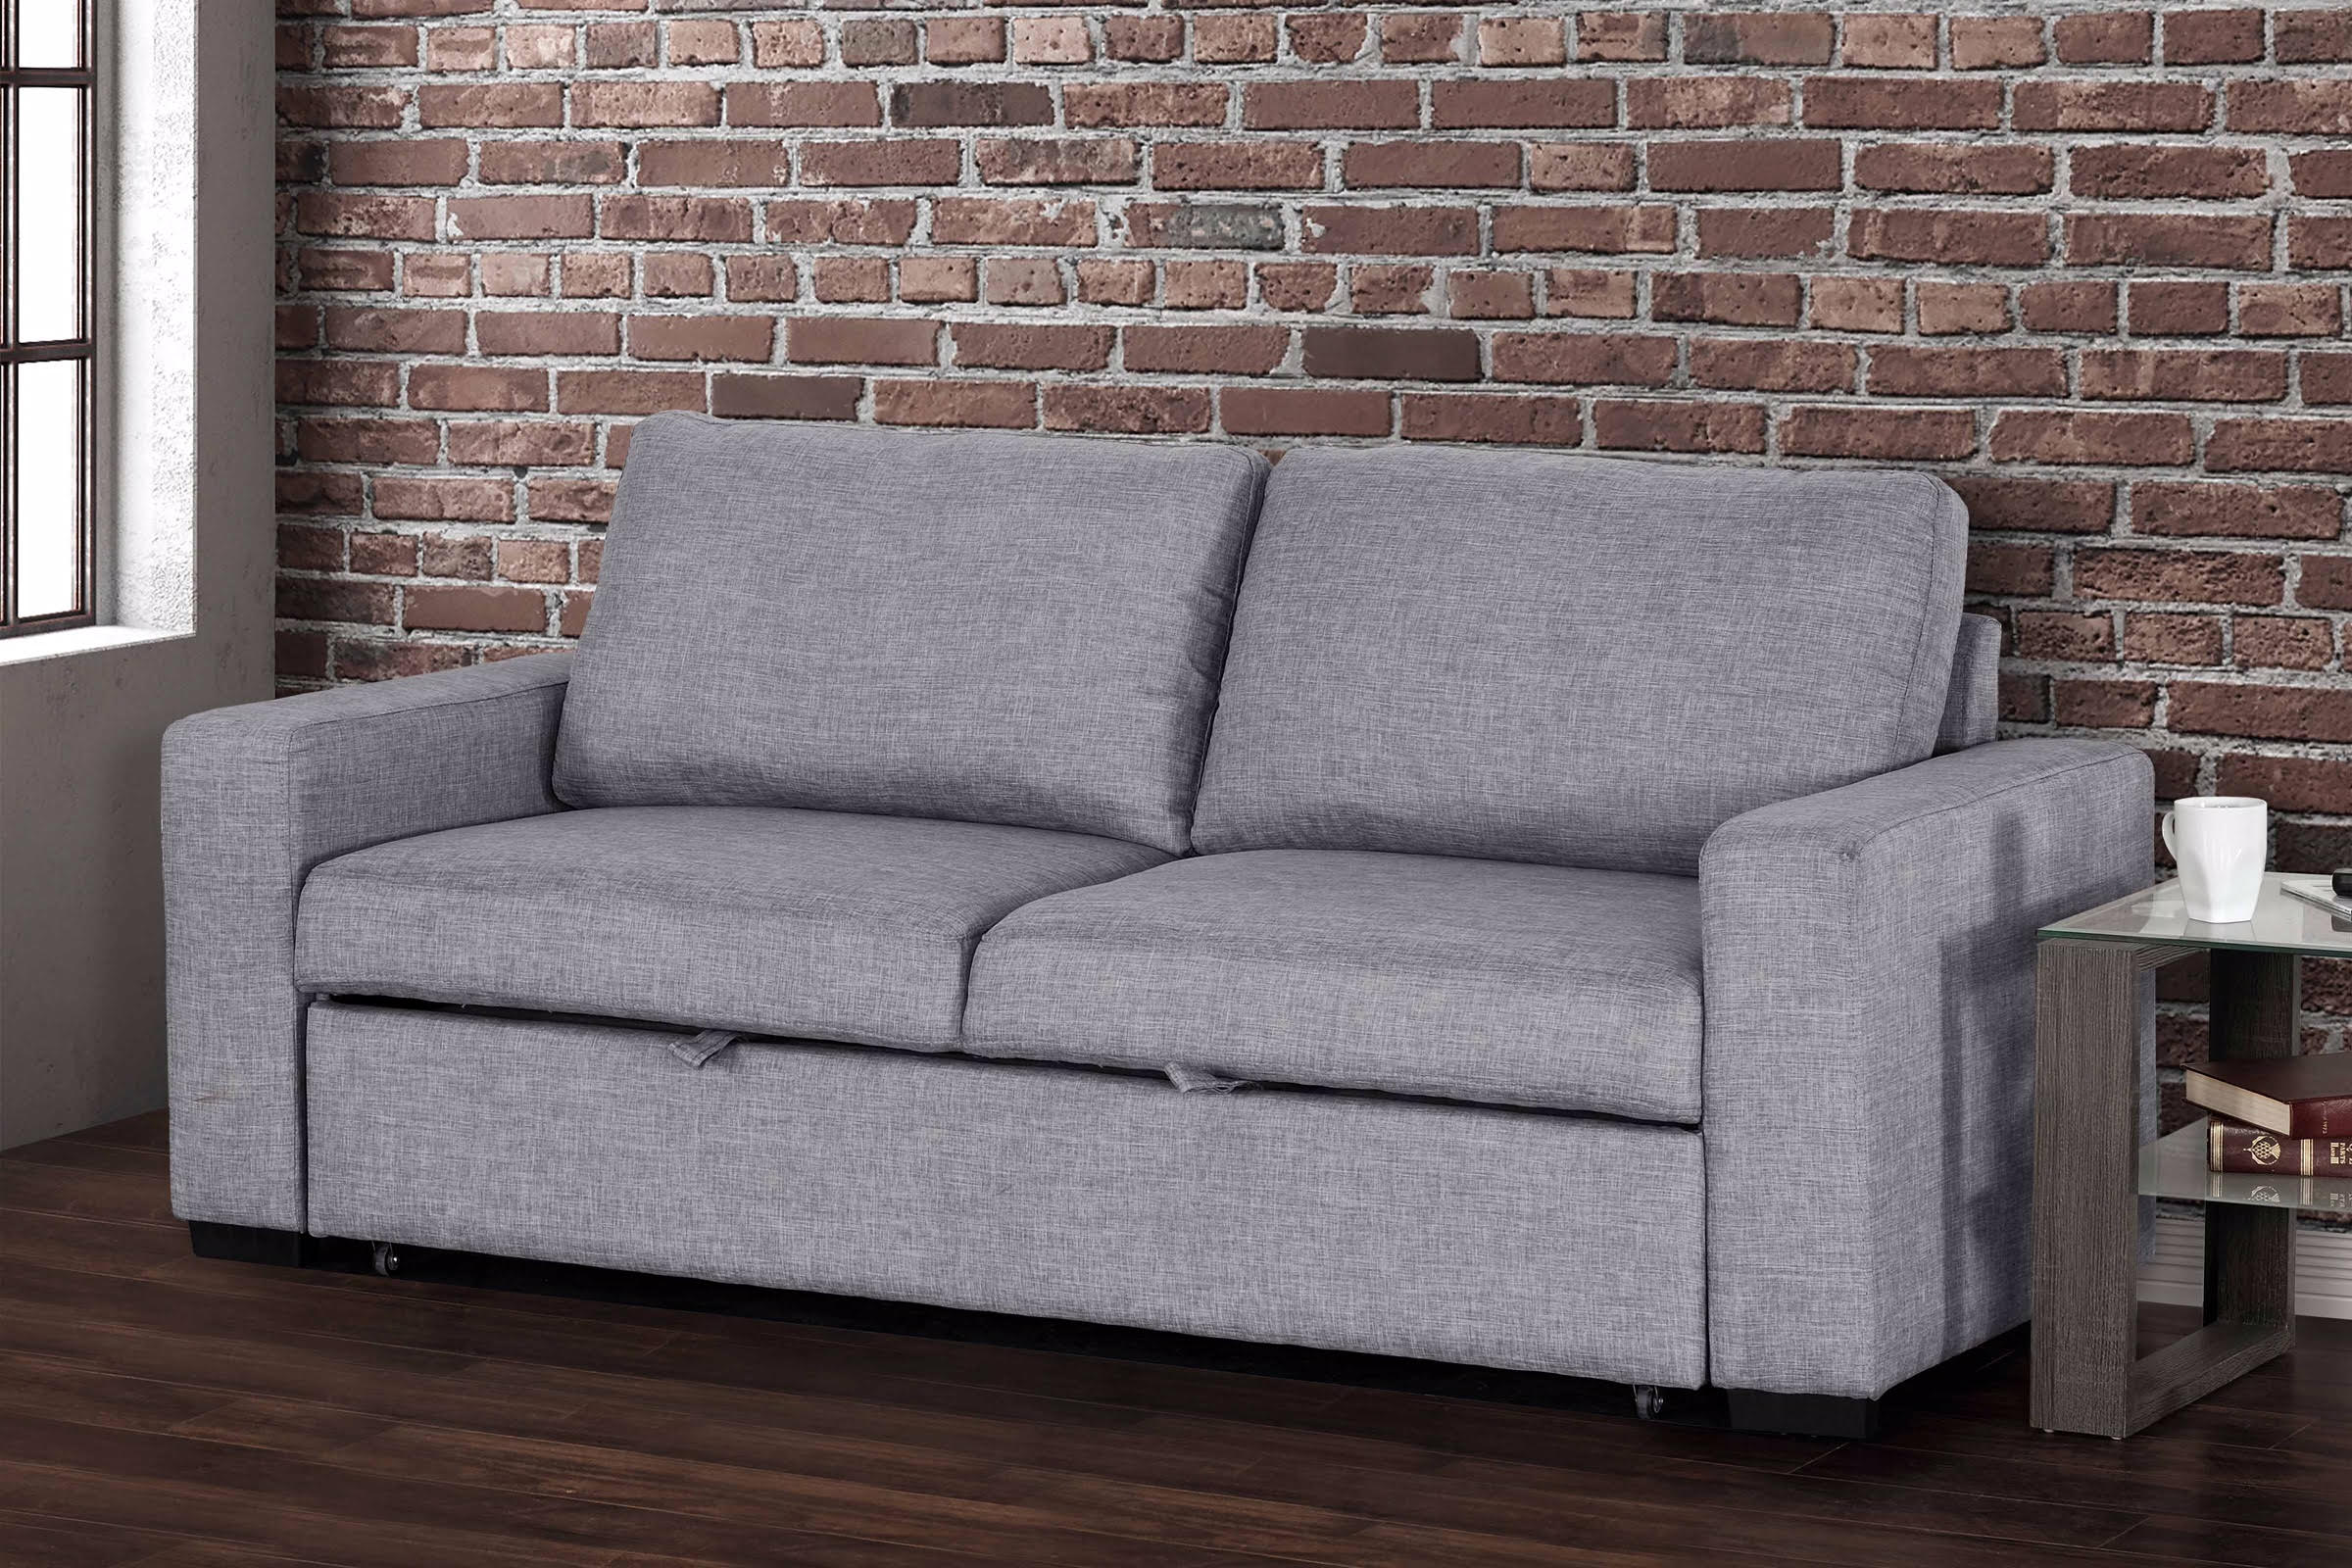 Grey Sofa Bed